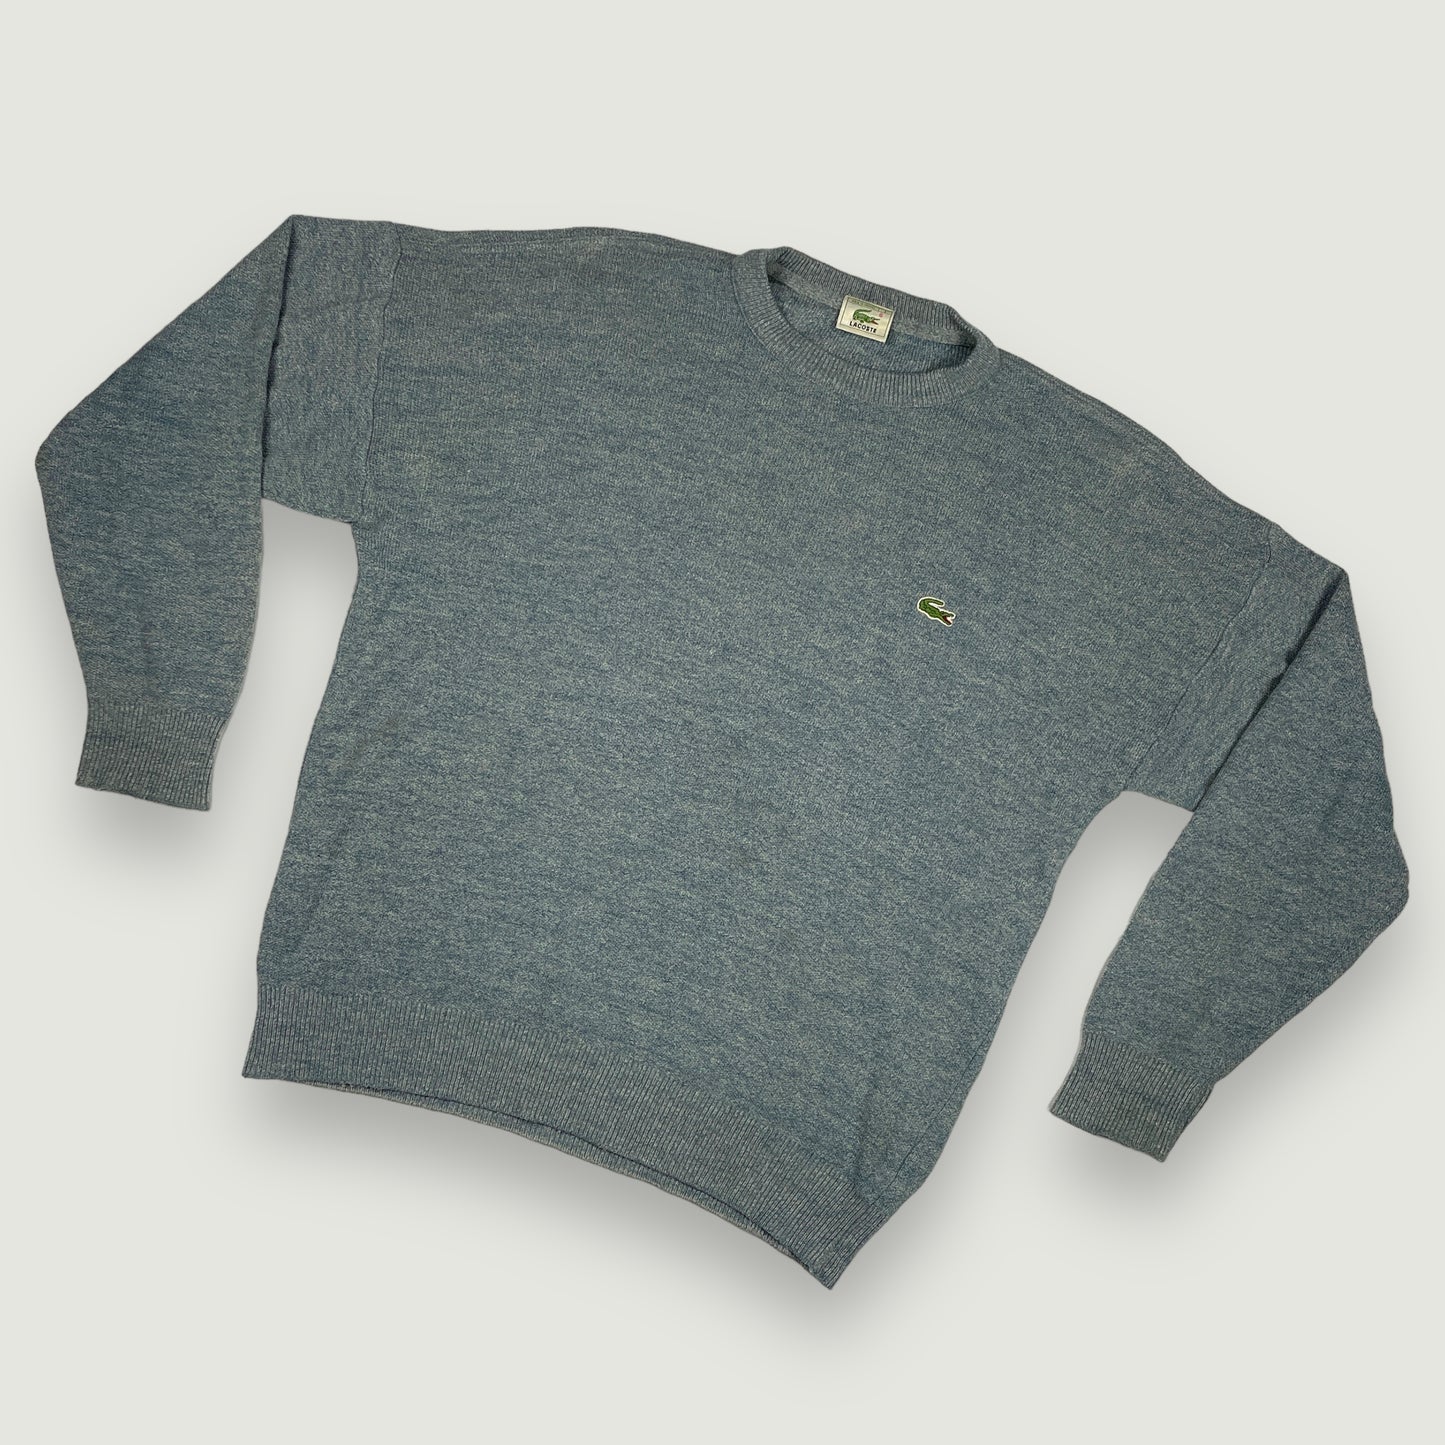 Lacoste Vintage Sweater (Xl)